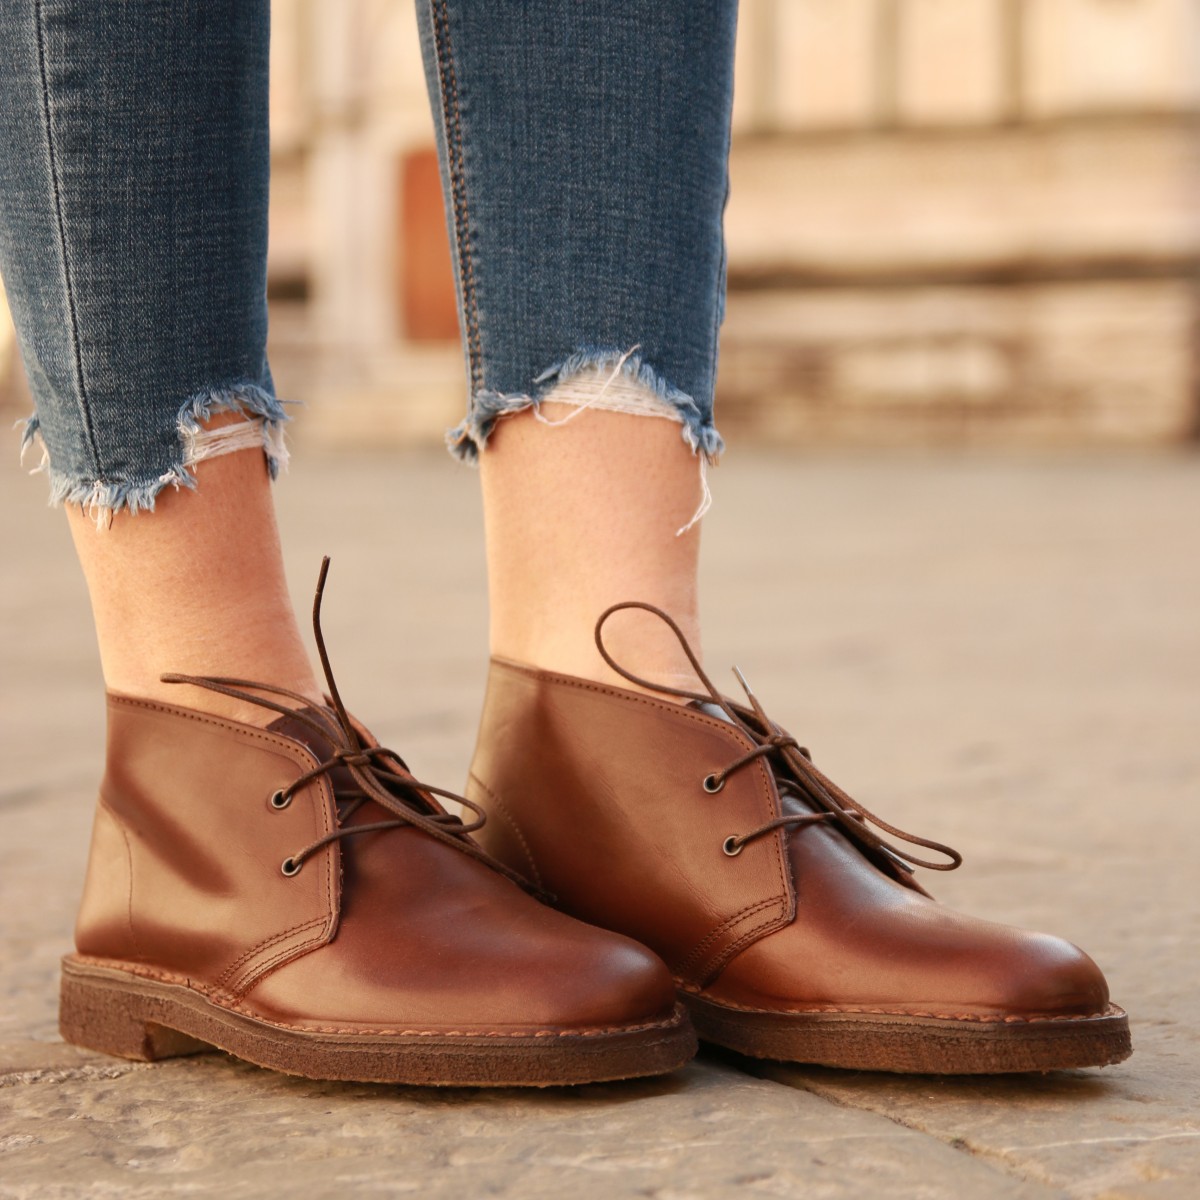 Women's dark brown leather chukka boots handmade in The leather craftsmen